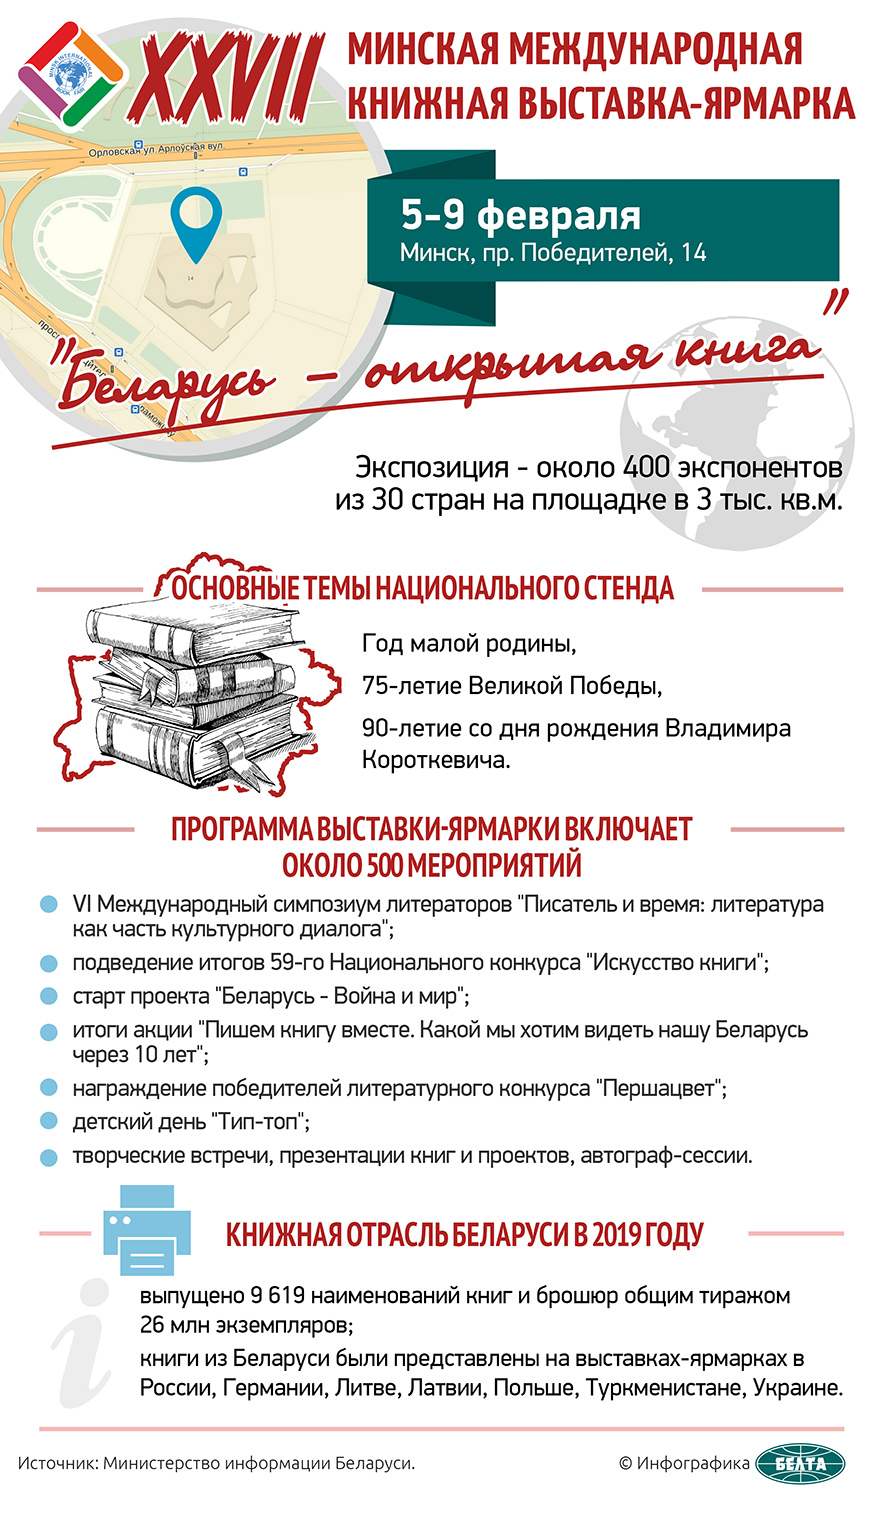 XXVII Минская международная книжная выставка-ярмарка